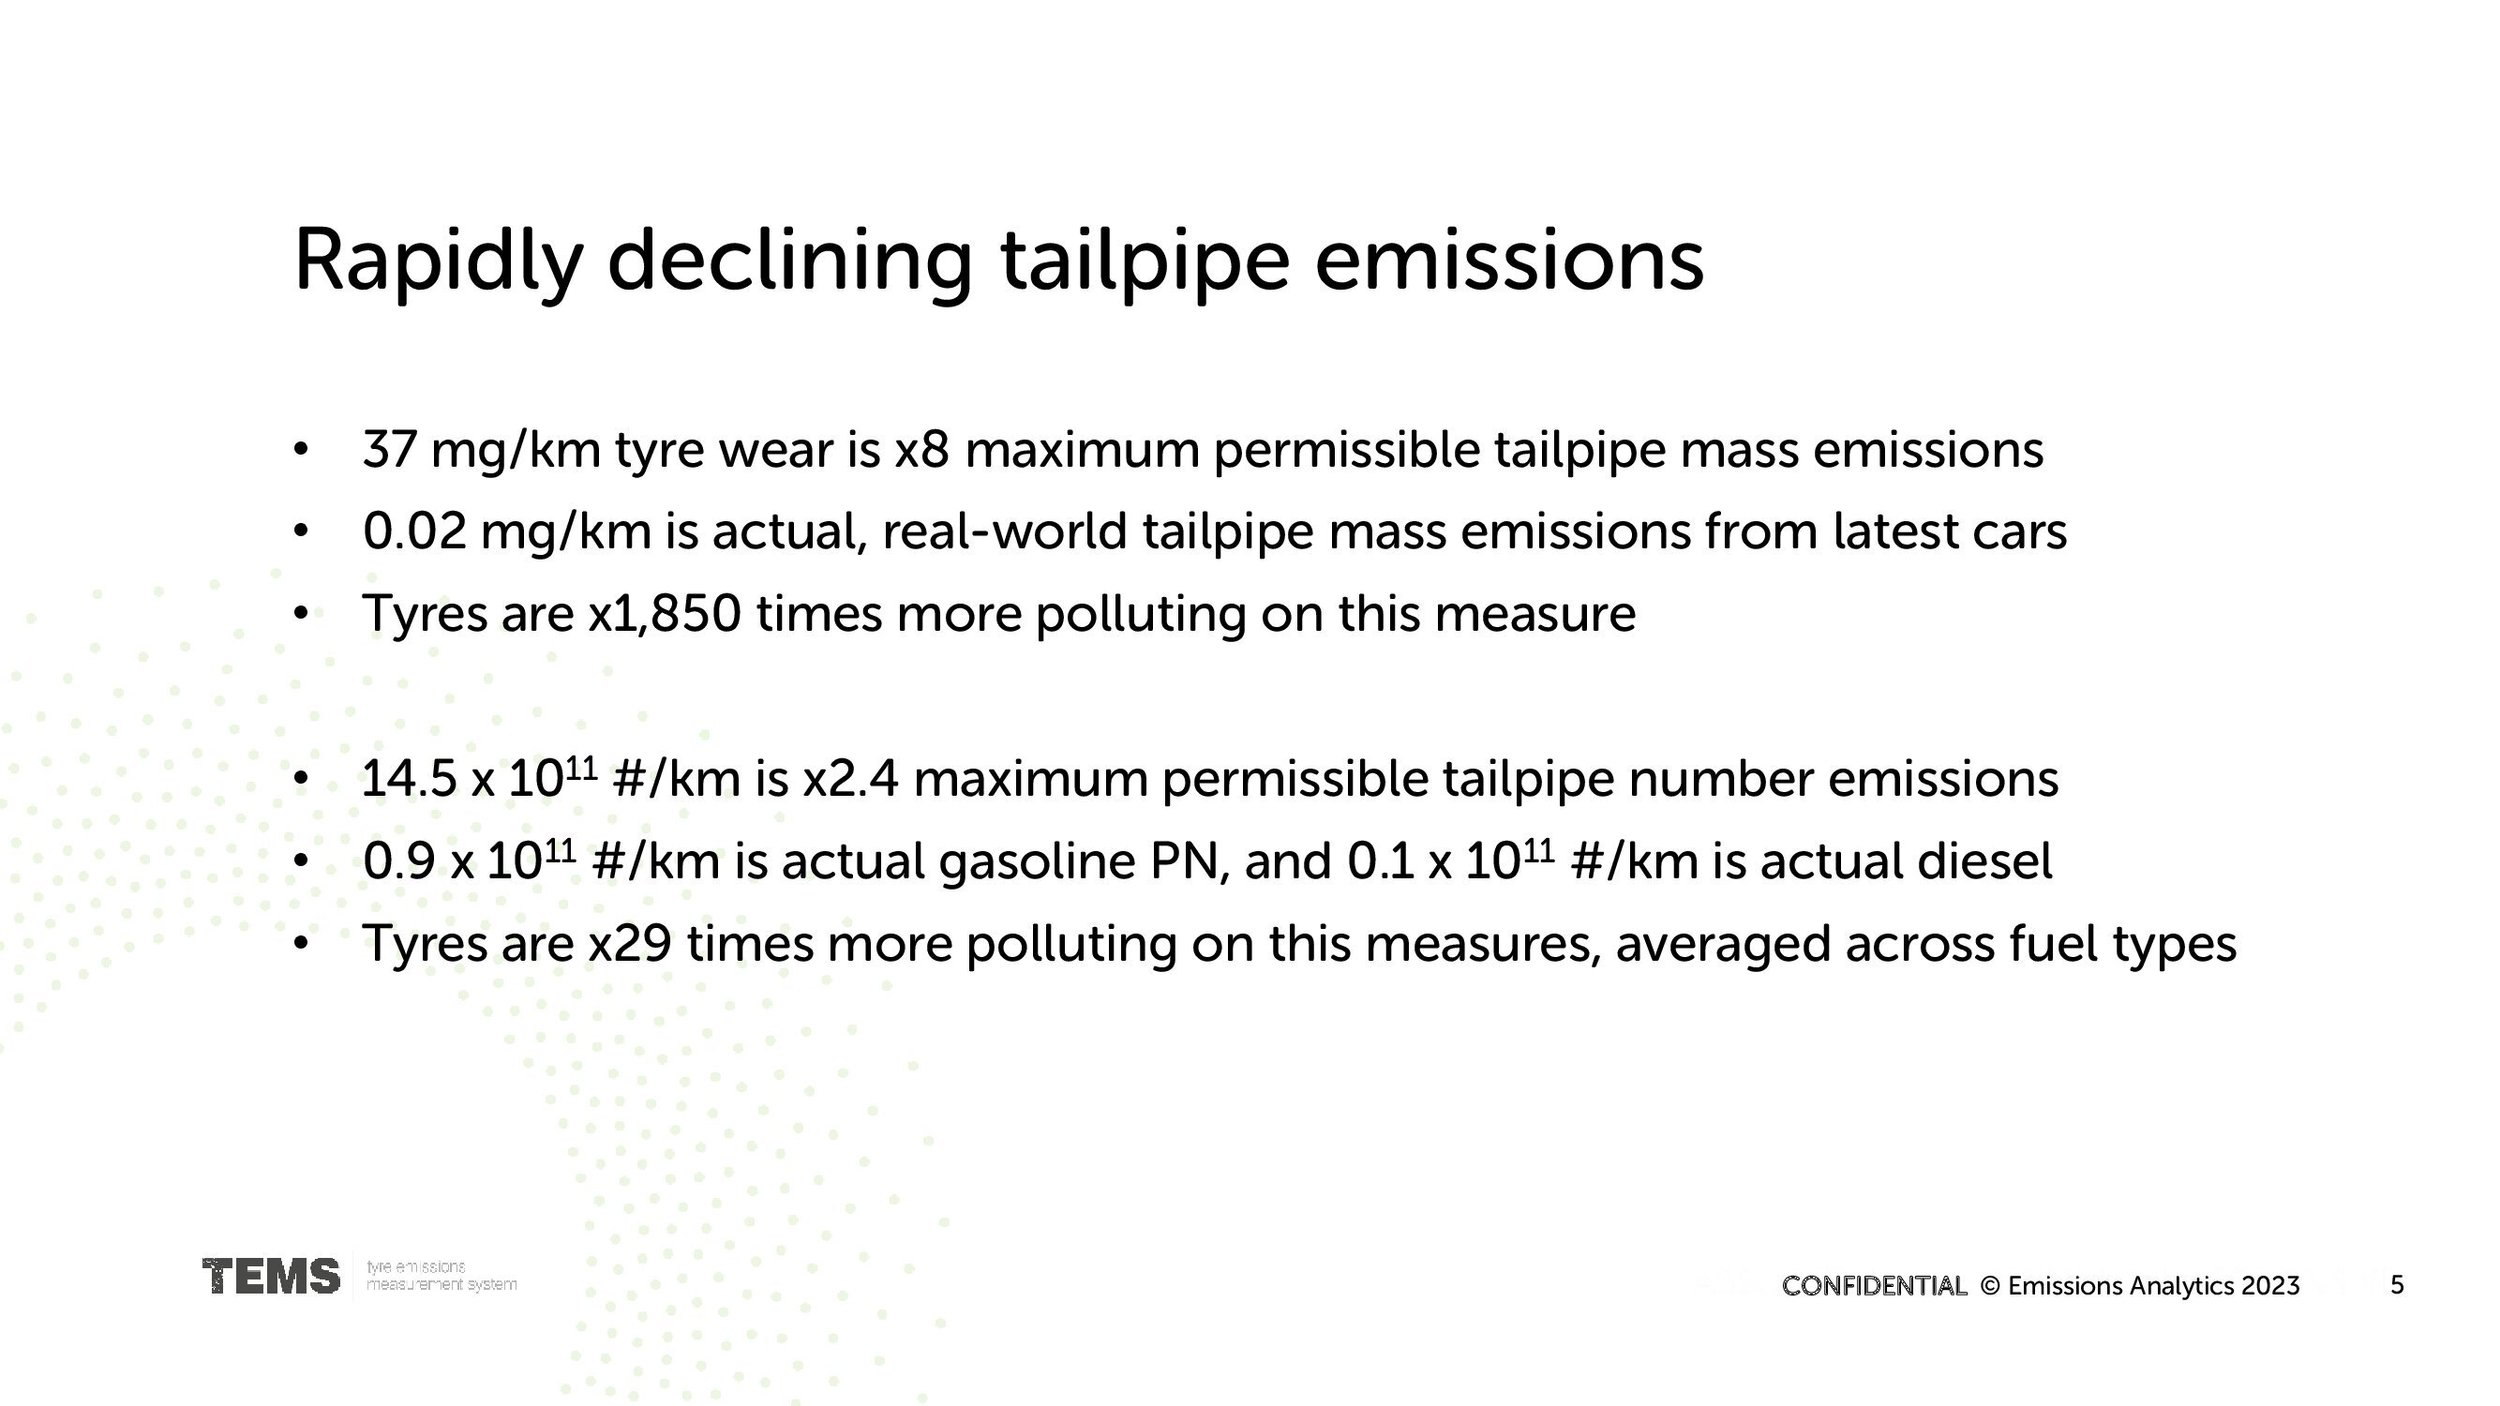 Emissions Analytics Automotive Tire Technology January 2023 v2_00005.jpg